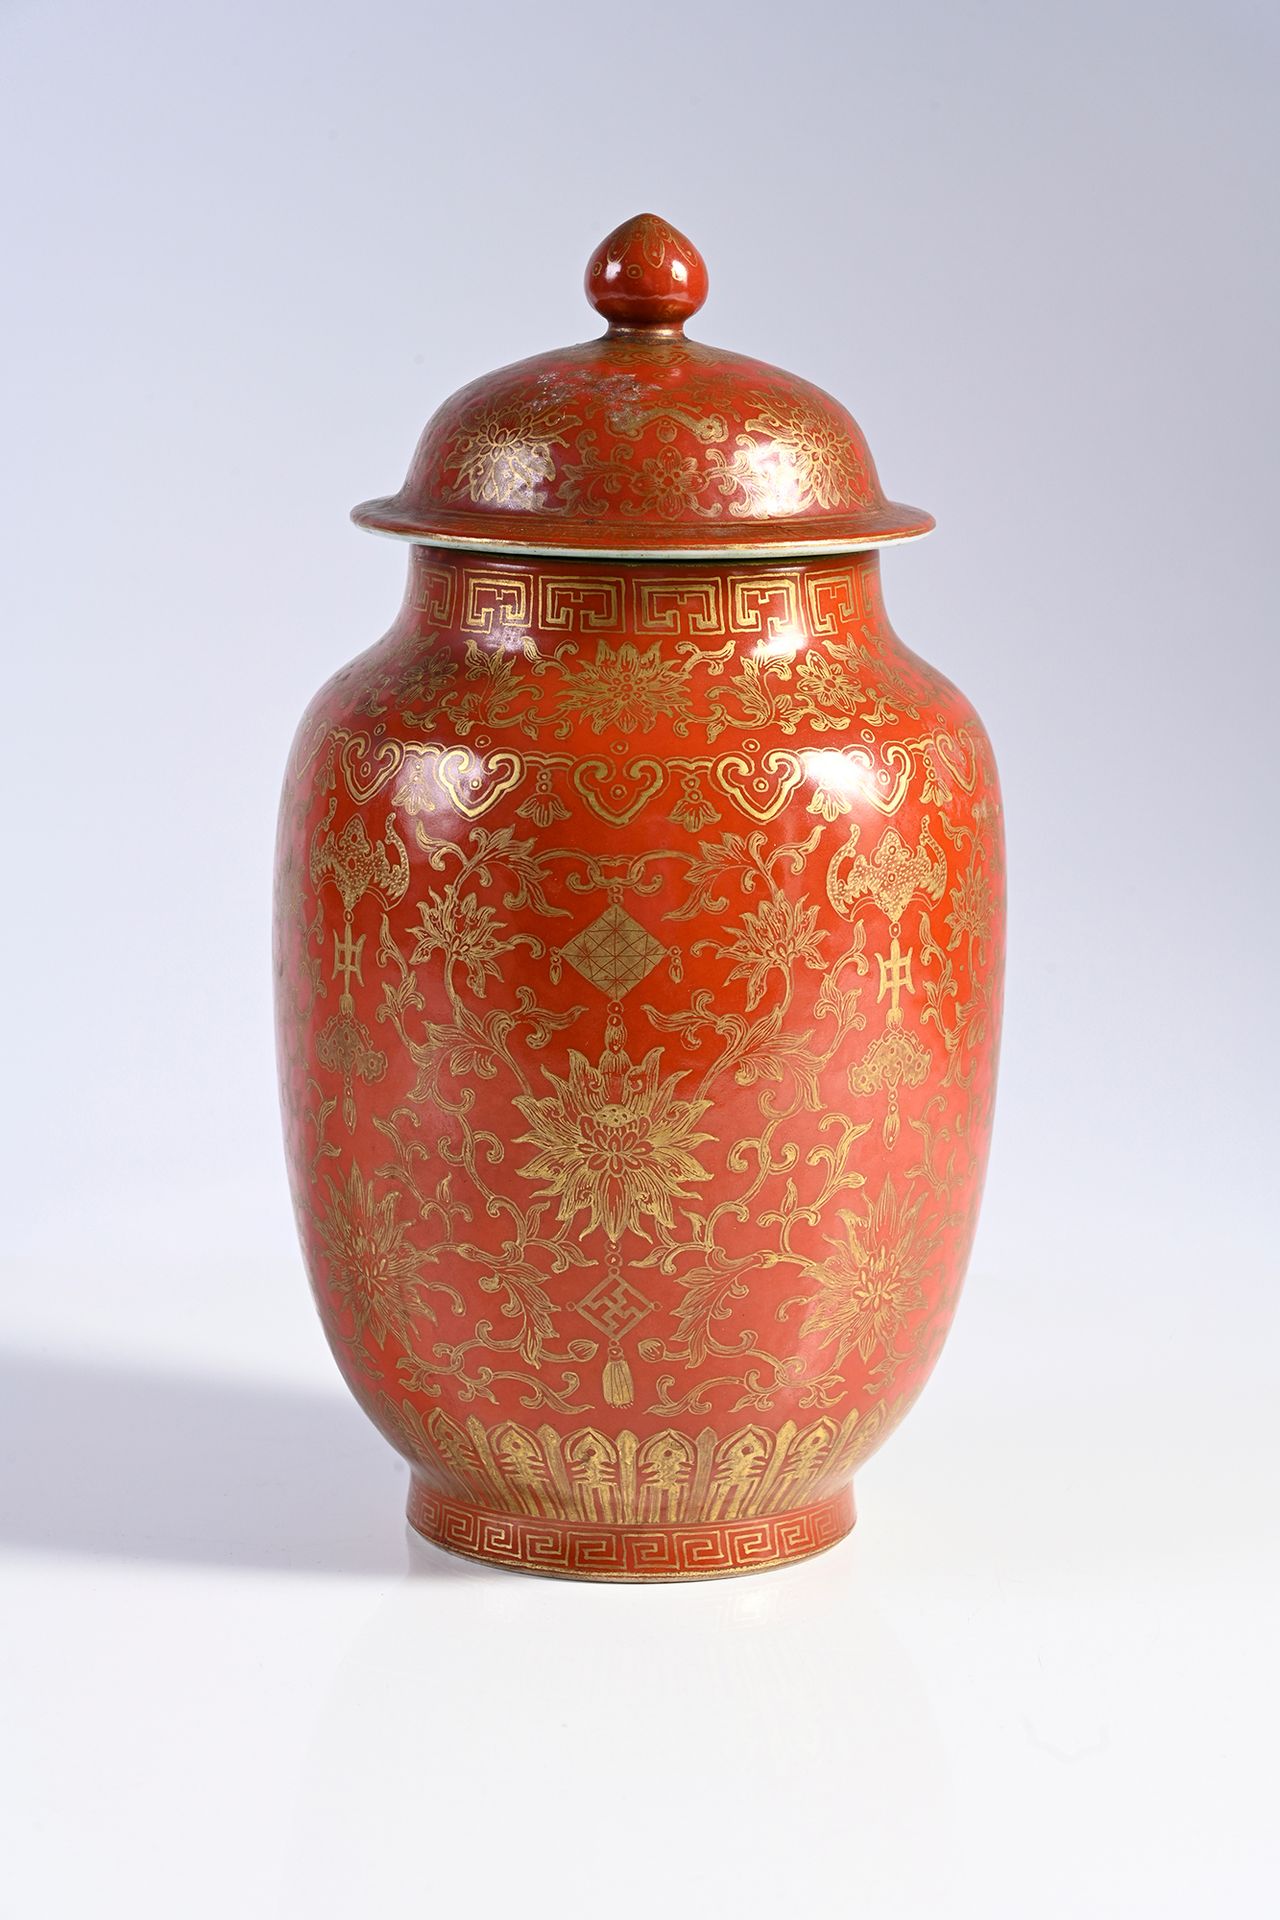 CHINE, Marque et époque Daoguang 罕见的有盖瓷器花瓶
灯笼形，装在小底上，卵圆形瓶身，高标肩，短颈，圆顶盖，在珊瑚色的单色背景上&hellip;